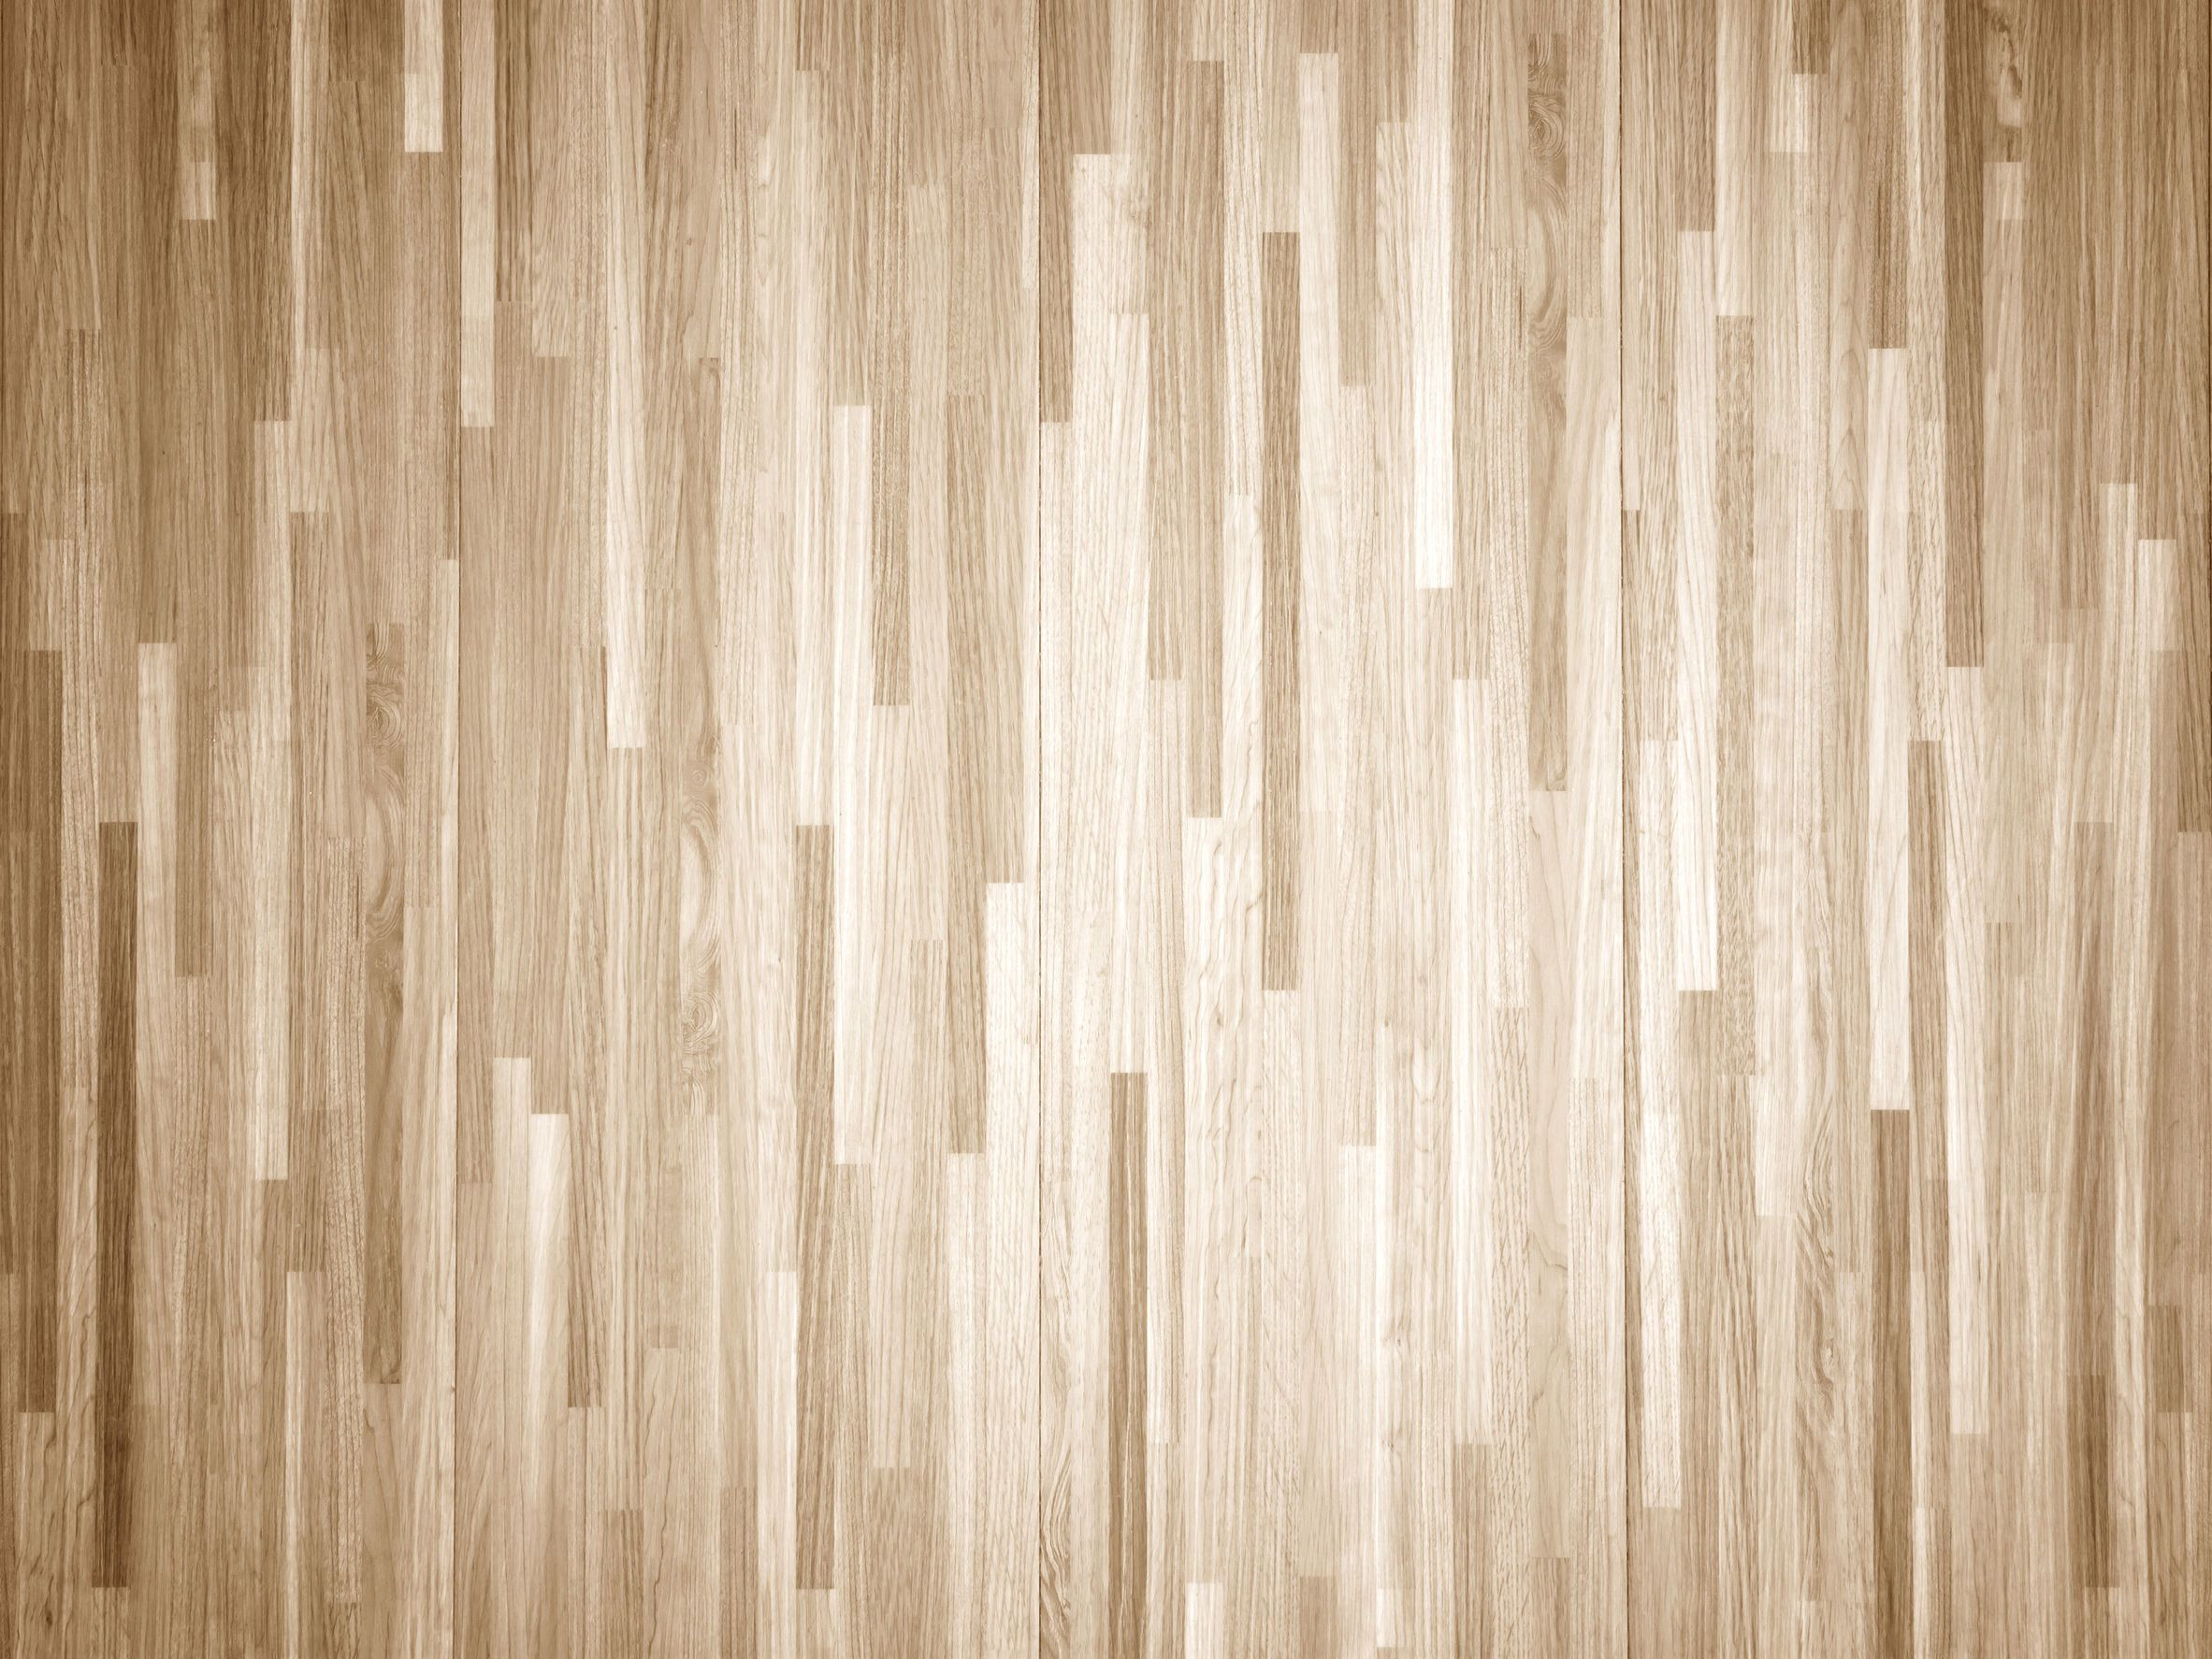 10 Stylish Hardwood Floor Cleaning Tips 2024 free download hardwood floor cleaning tips of how to chemically strip wood floors woodfloordoctor com inside you